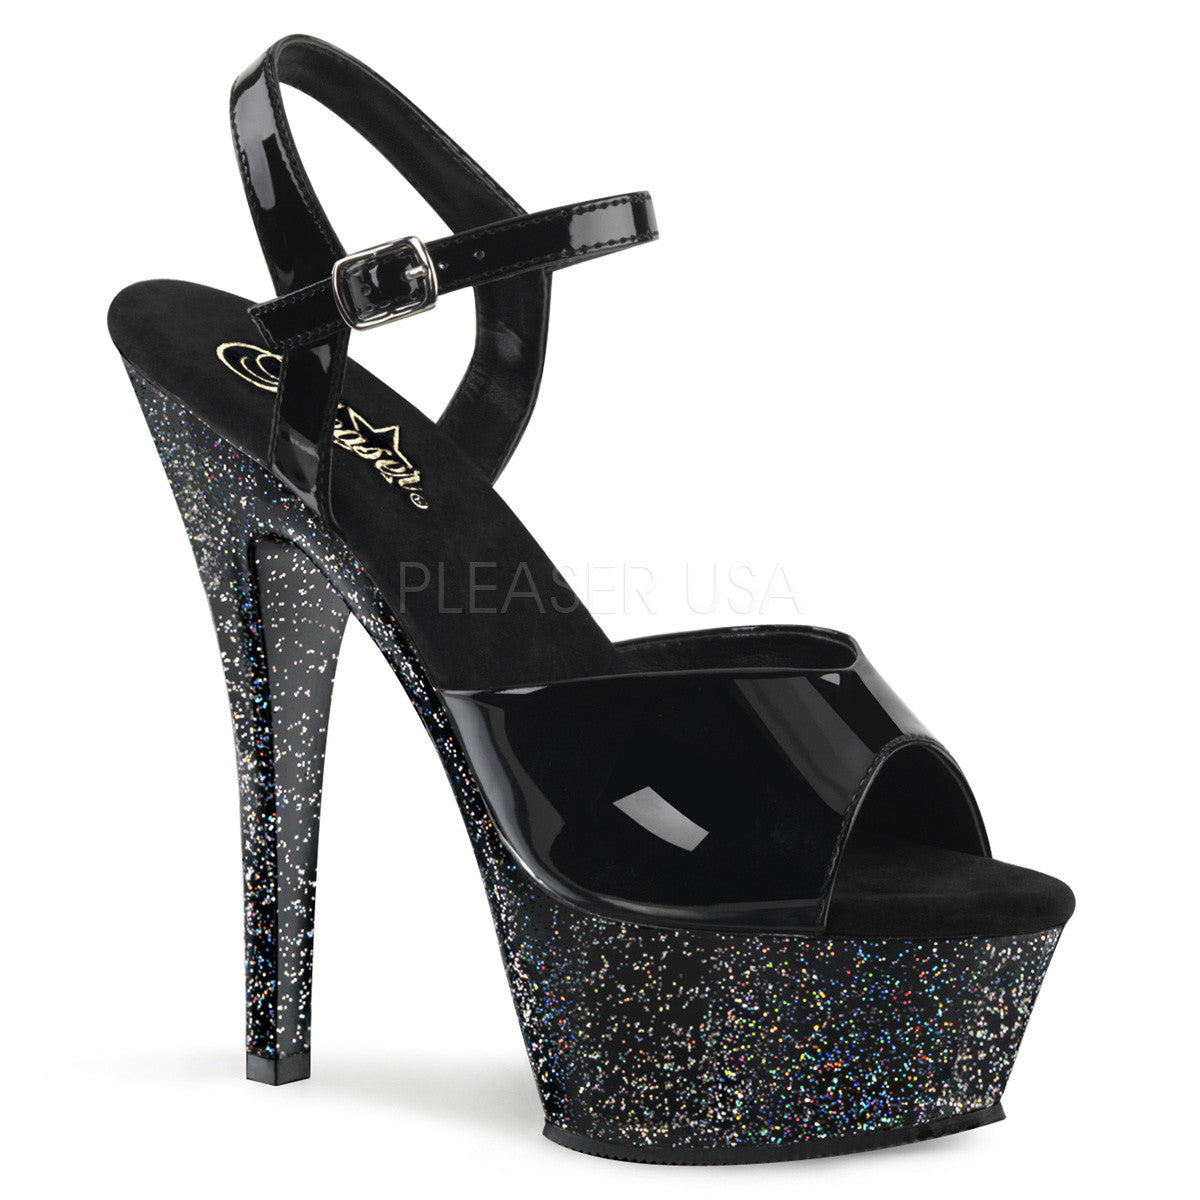 Pleaser KISS-209MG Black Ankle Strap Sandals – Shoecup.com